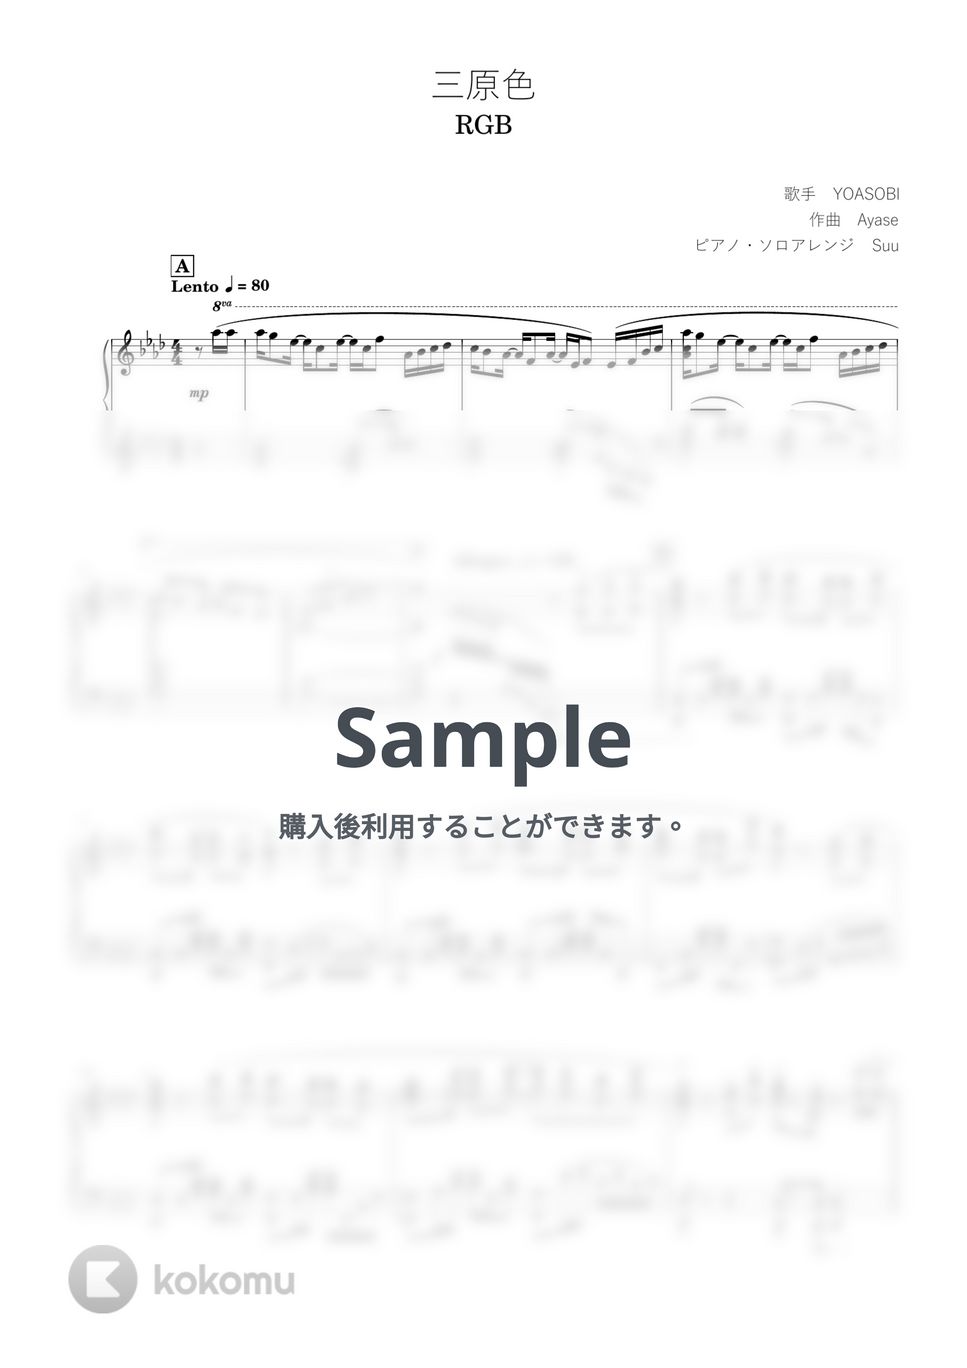 YOASOBI - 三原色 (ピアノソロ上級  / 「NTTドコモ新プランahamo」TVCM) by Suu